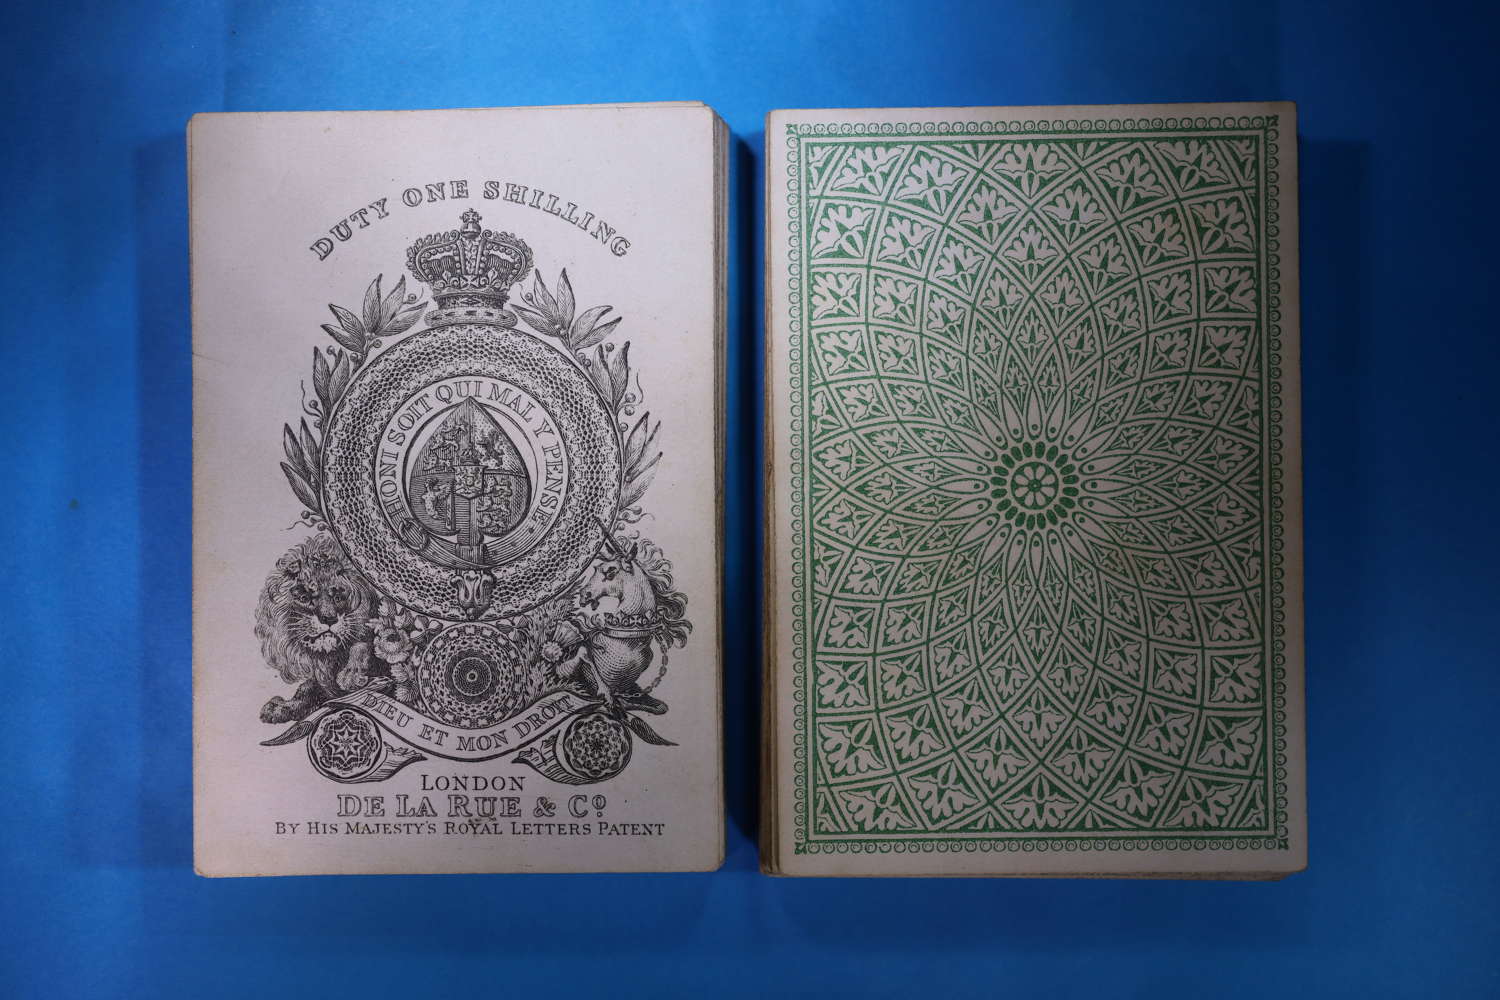 FULL DECK OF 52 CARDS BY DE LA RUE CIRCA 1840